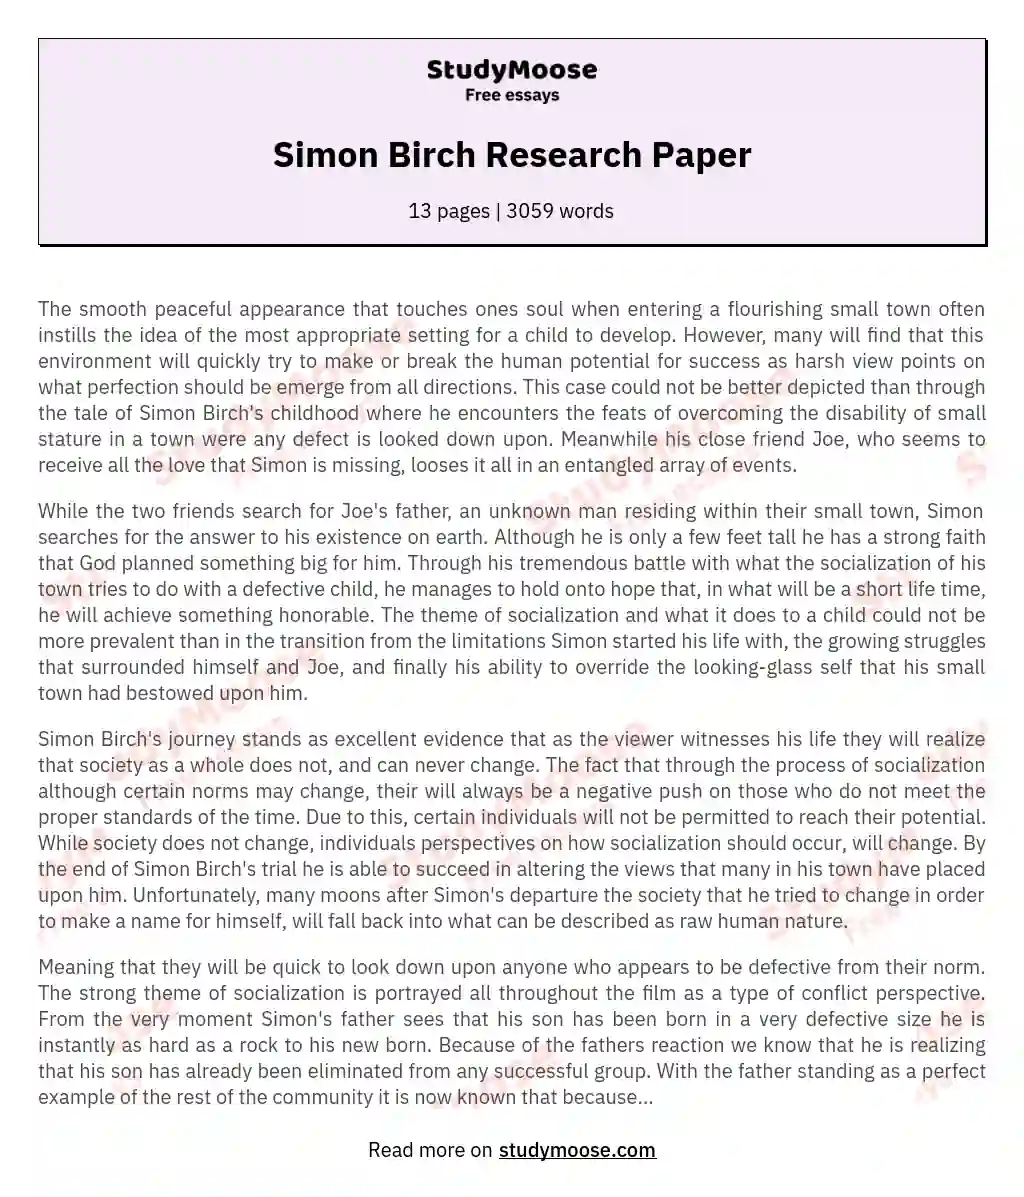 Simon Birch Research Paper